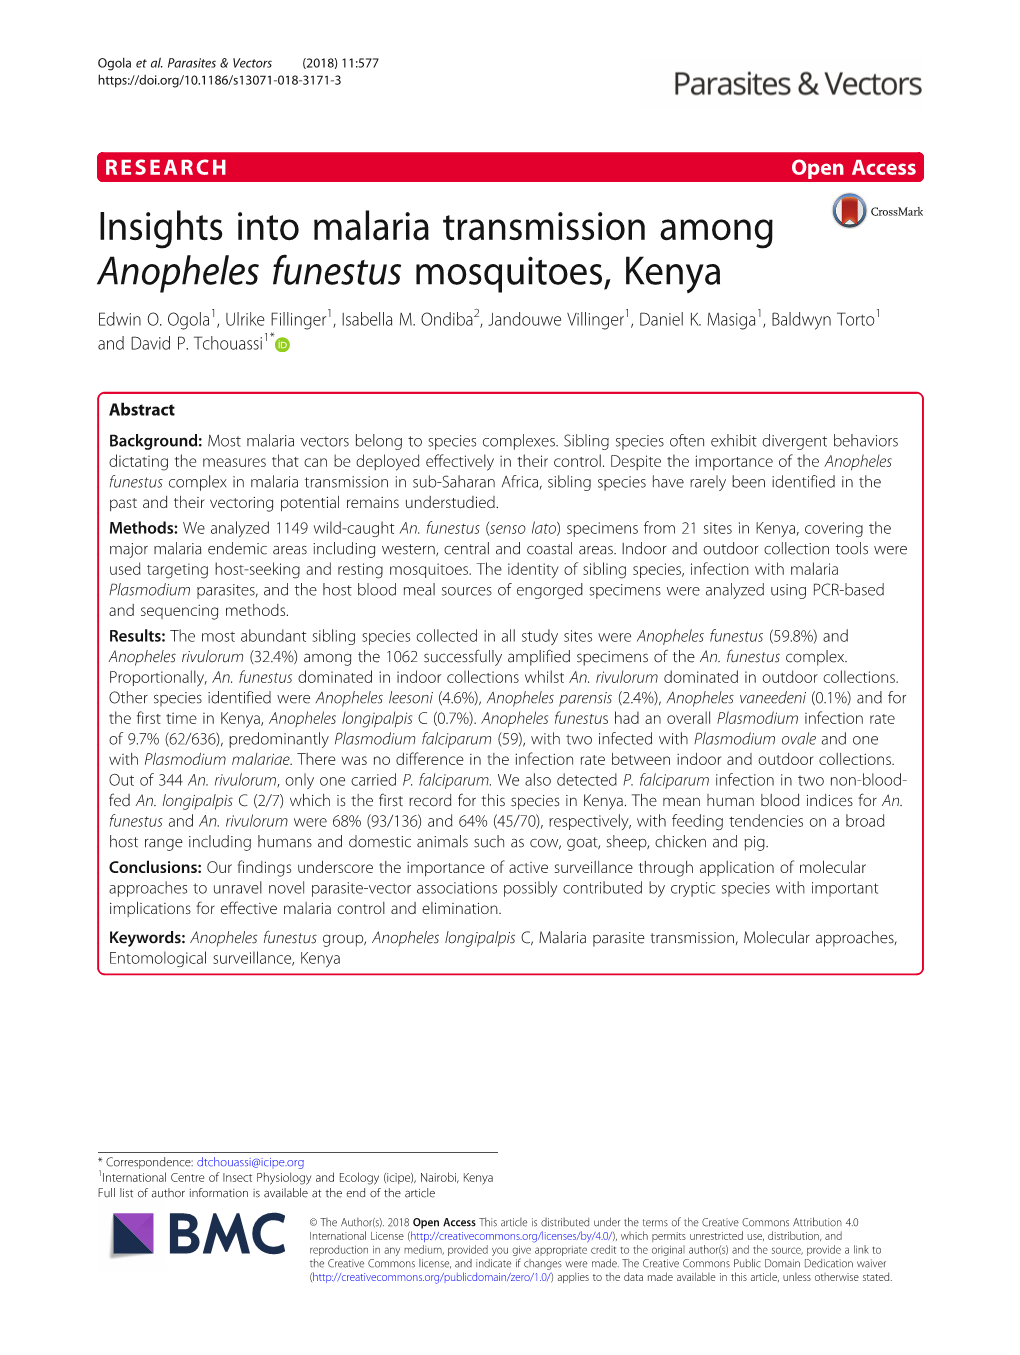 Insights Into Malaria Transmission Among Anopheles Funestus Mosquitoes, Kenya Edwin O